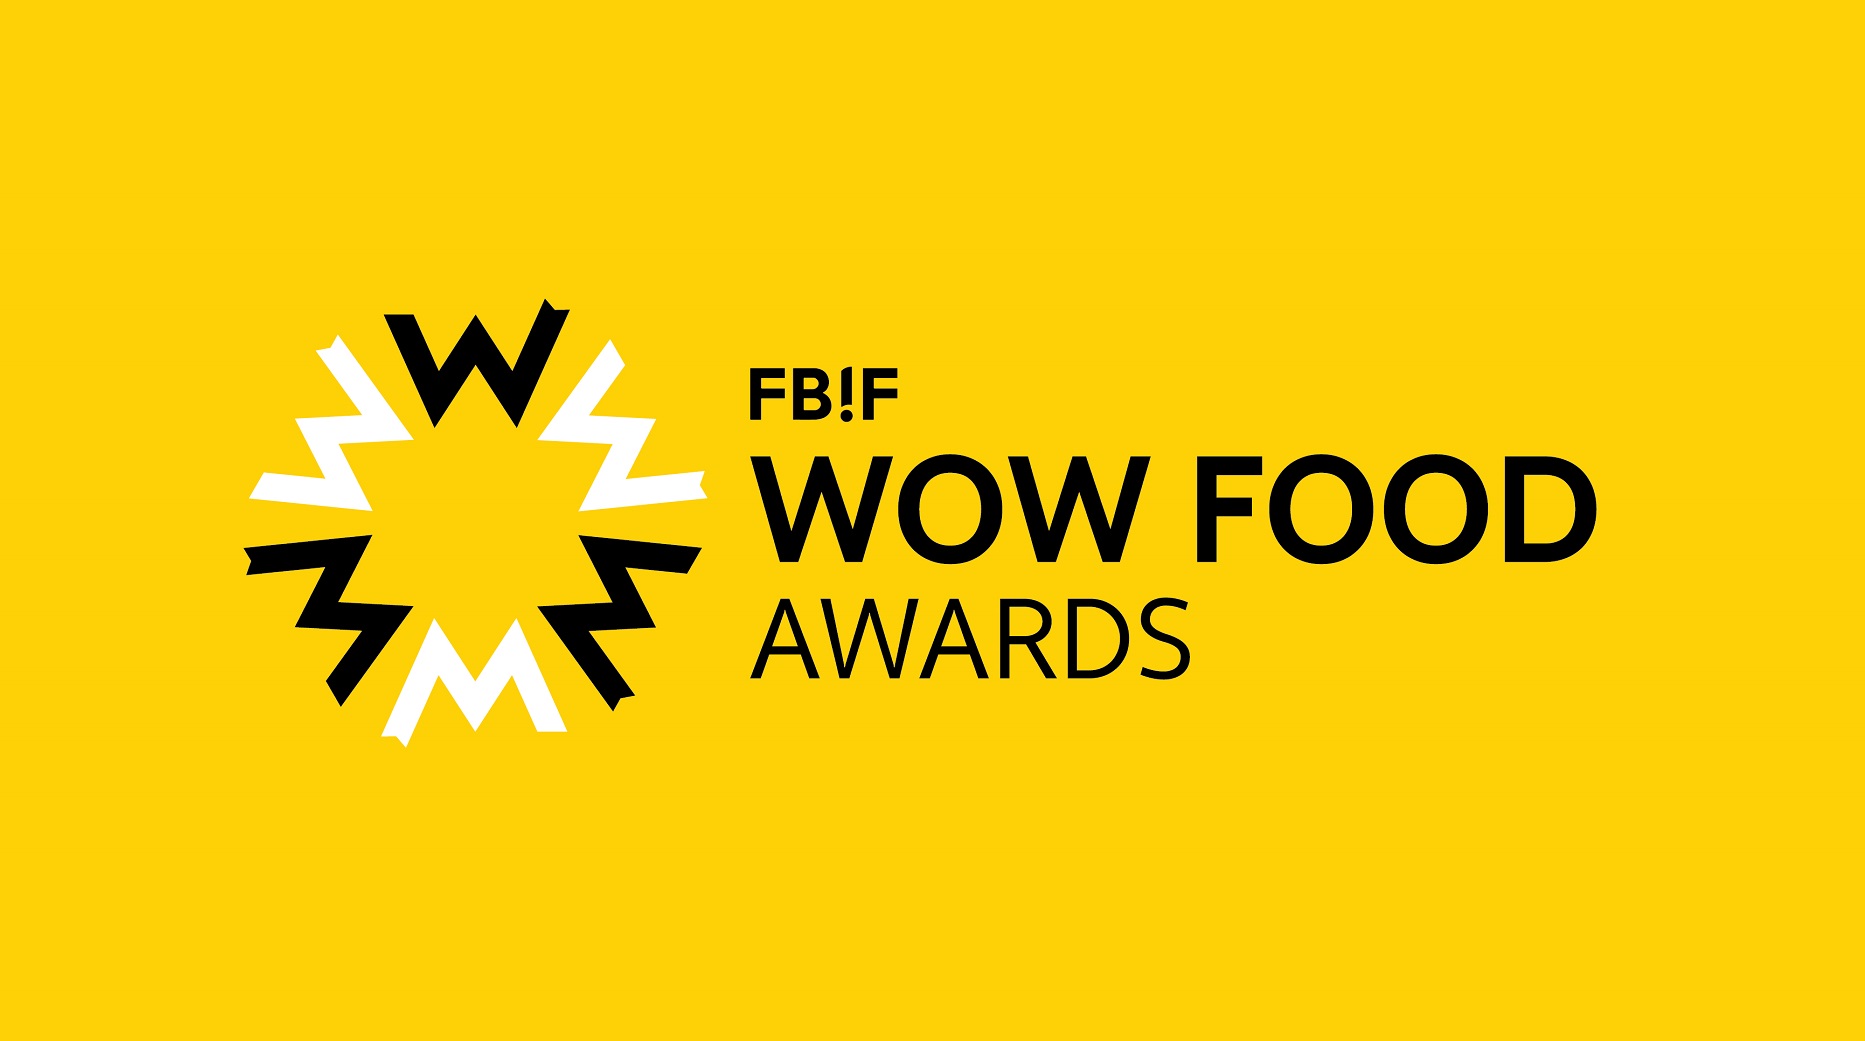 FBIF Wow Food Awards    